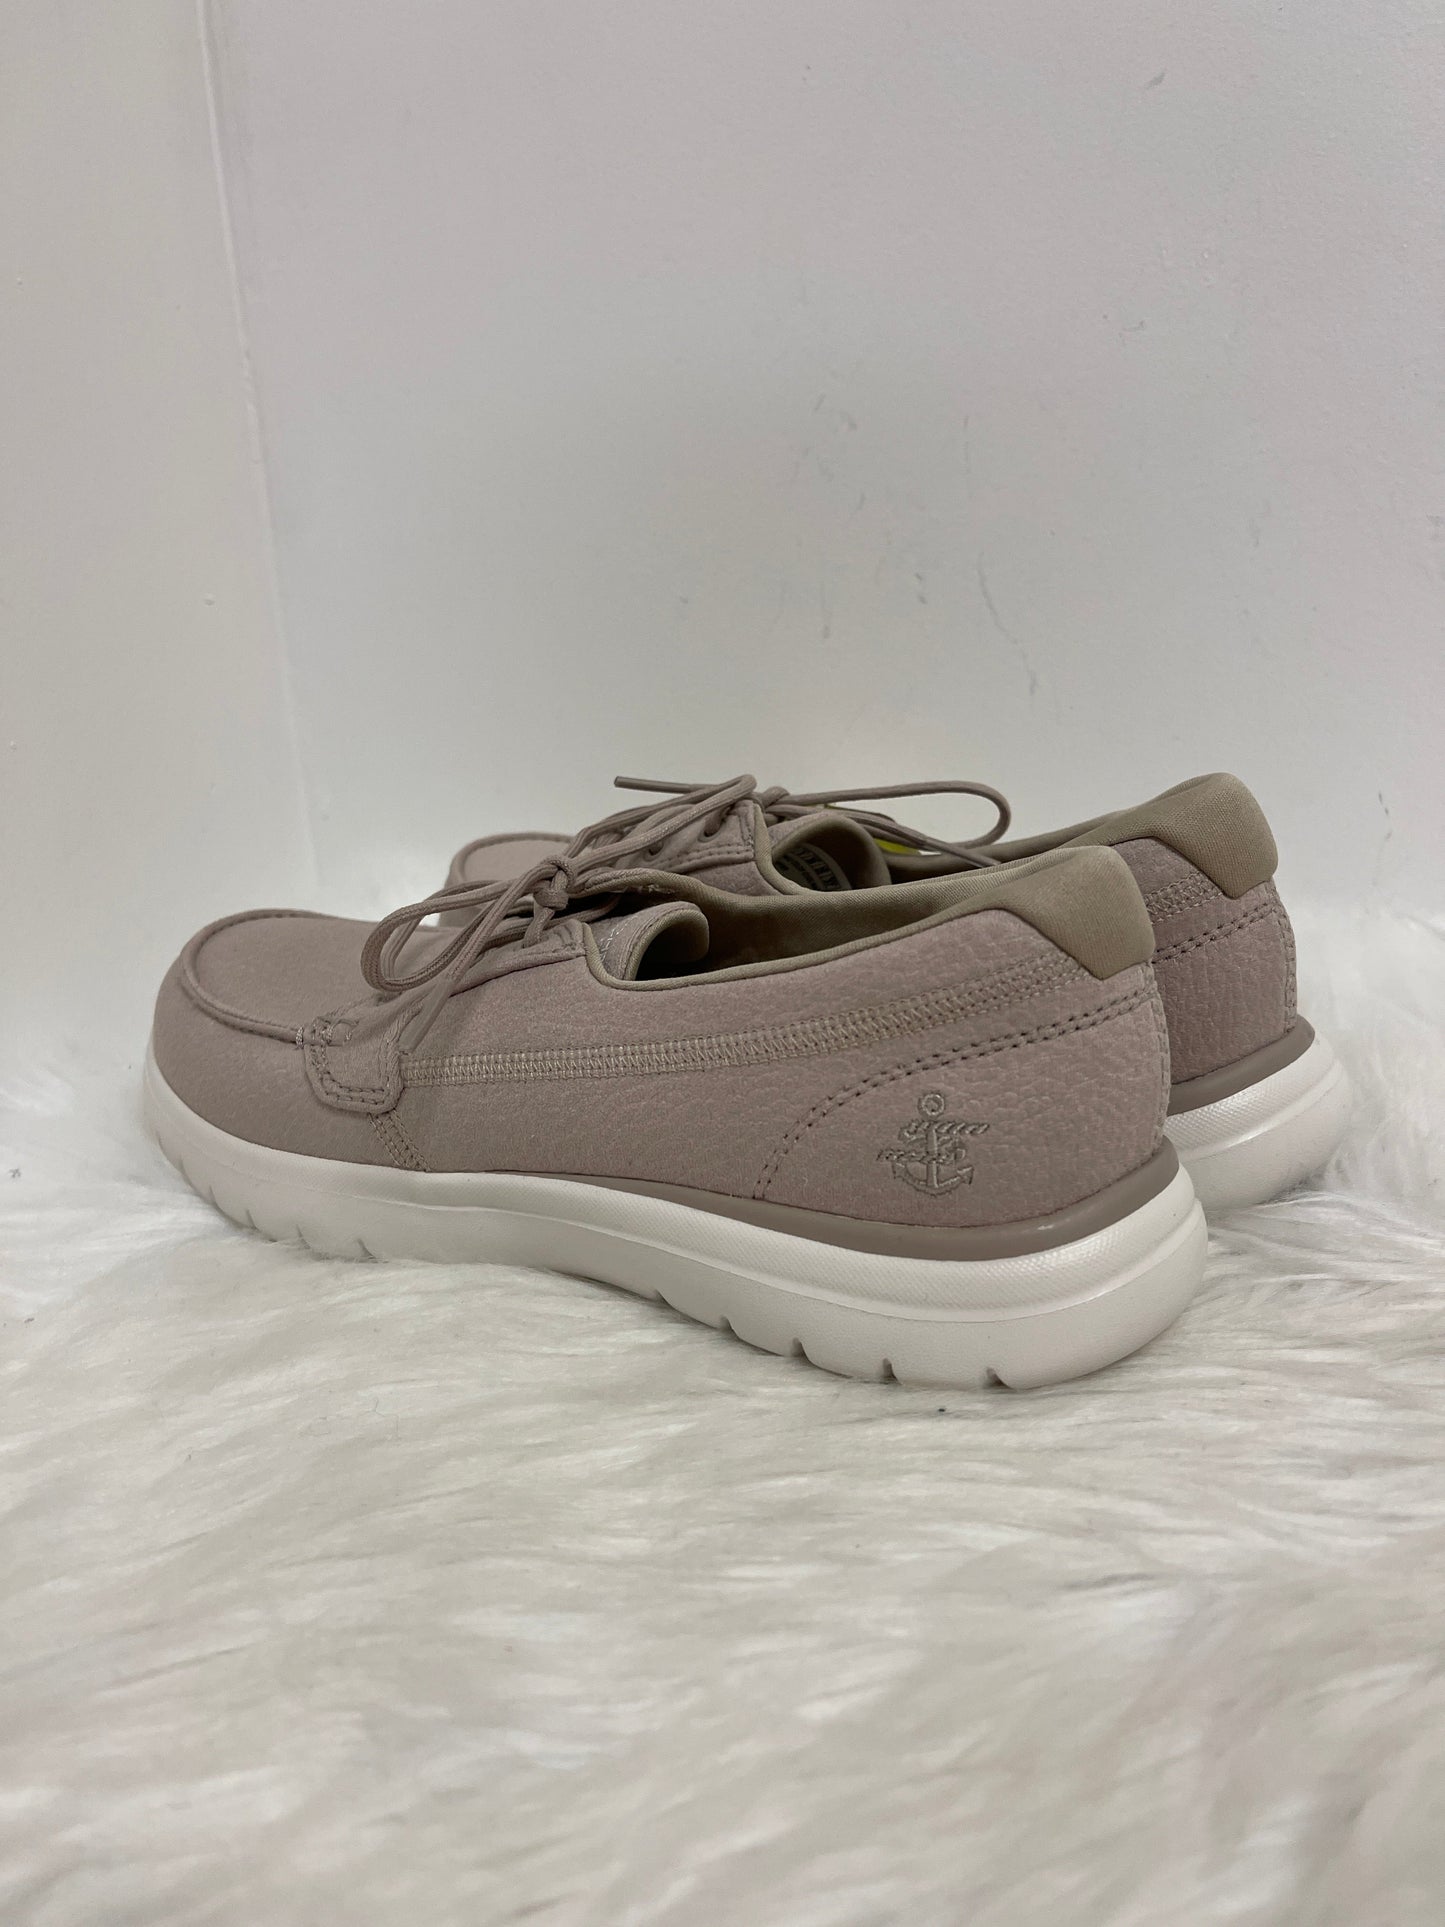 Cream Shoes Flats Skechers, Size 8